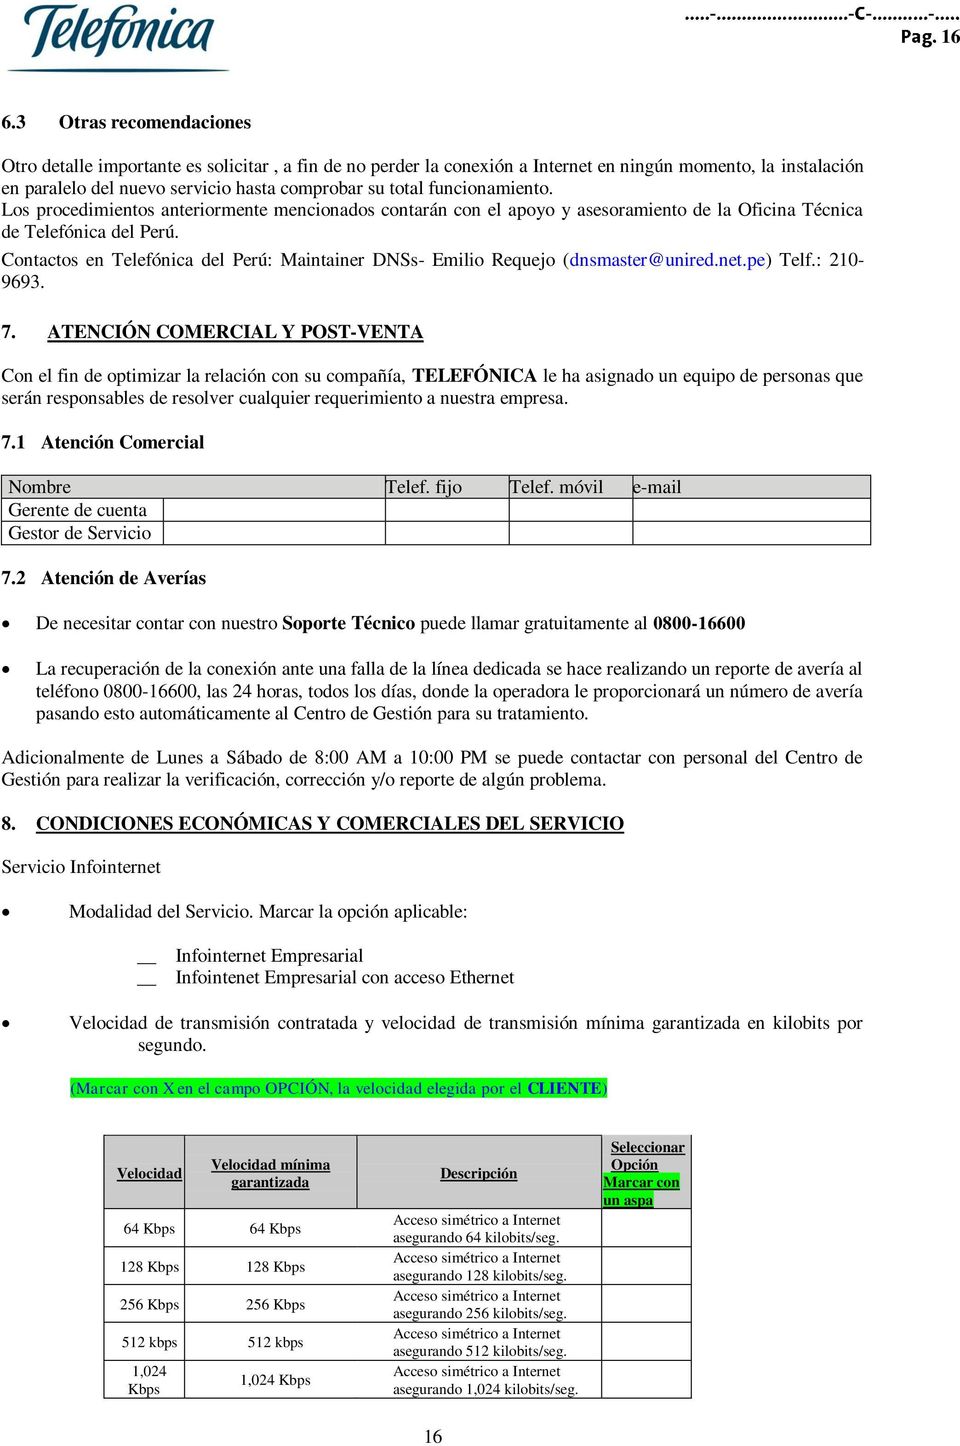 Contactos en Telefónica del Perú: Maintainer DNSs- Emilio Requejo (dnsmaster@unired.net.pe) Telf.: 210-9693. 7.